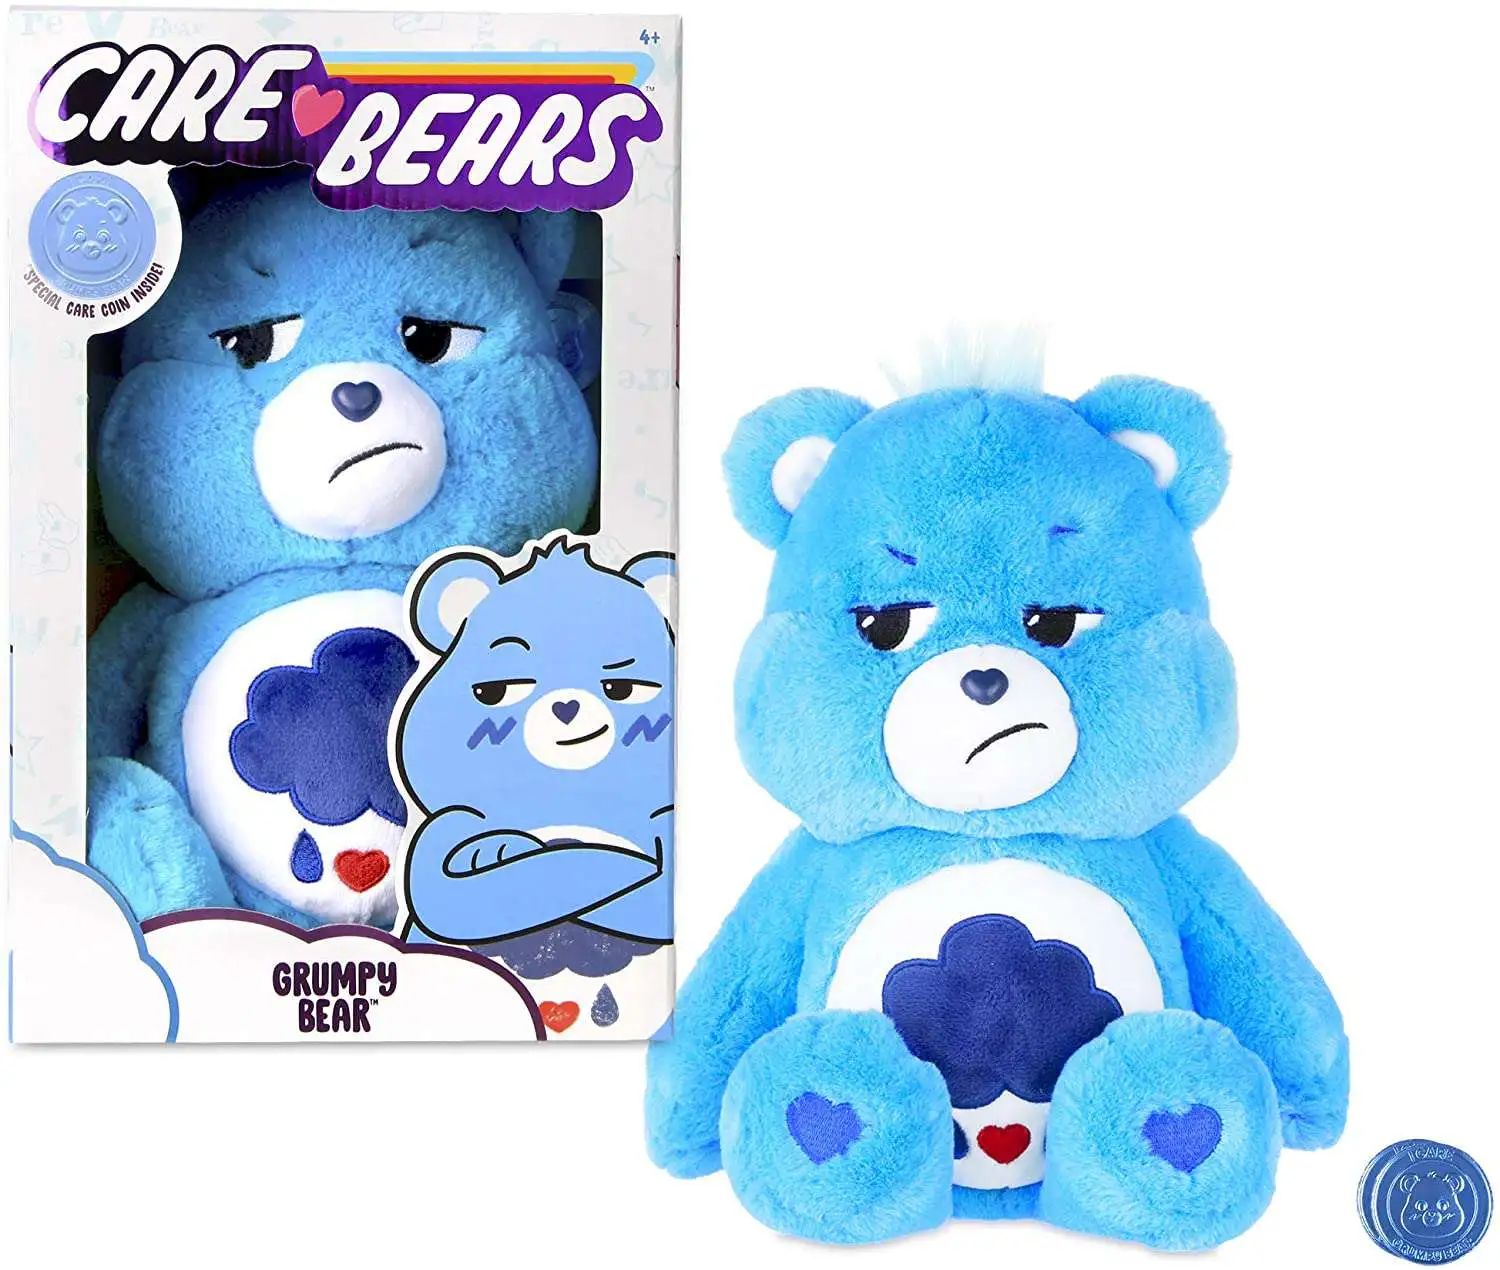 Care Bears Grumpy Bear 14 Plush with Collectible Coin Basic Fun - ToyWiz